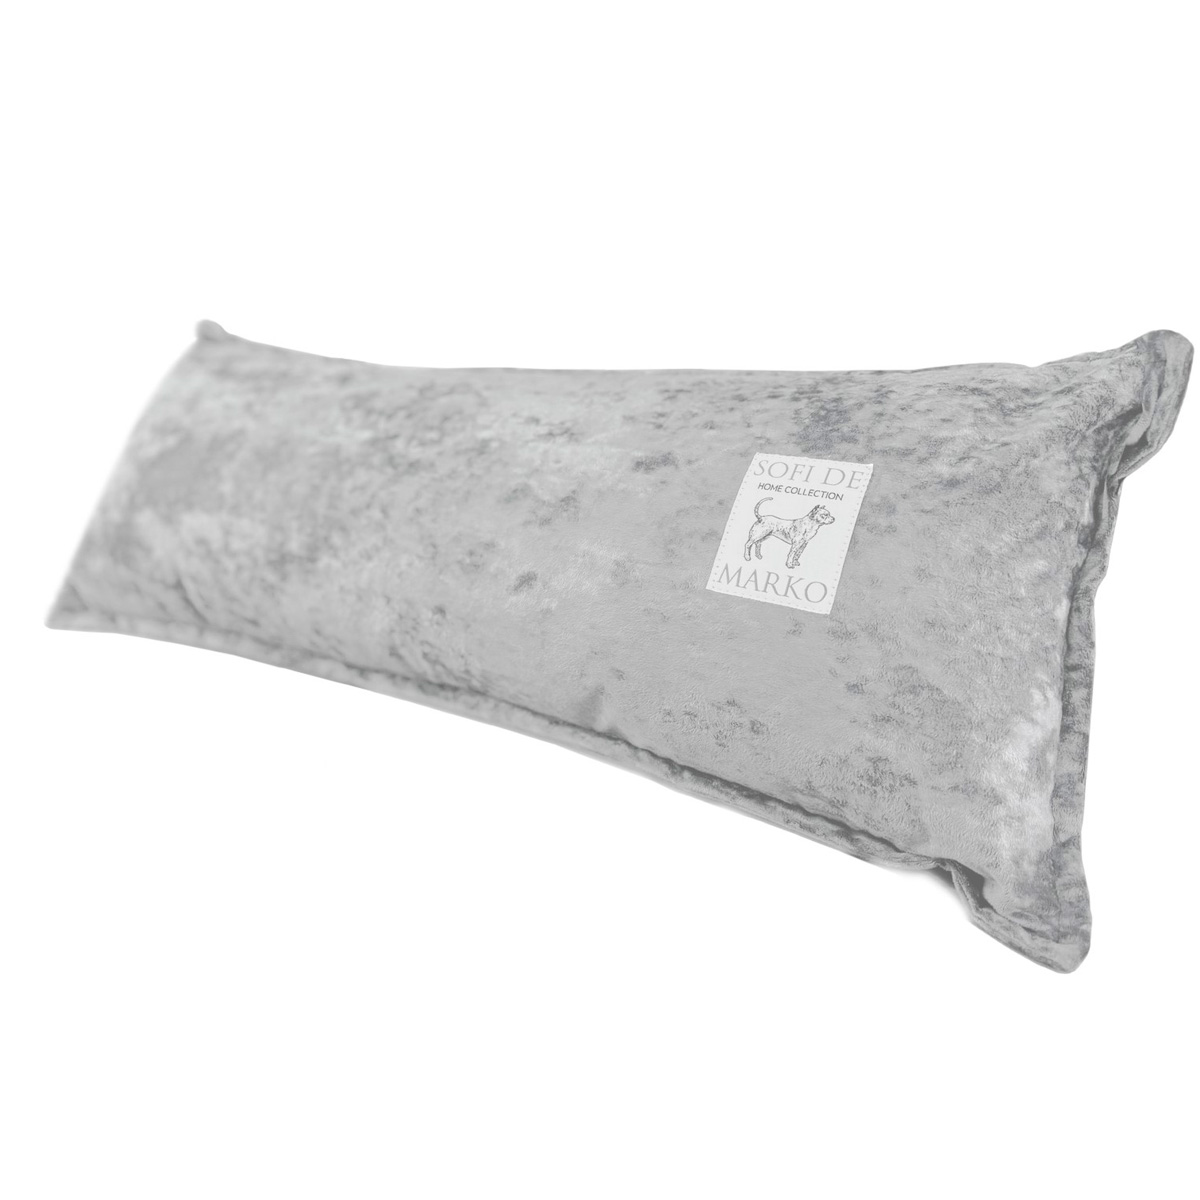 Подушка декоративная Sofi de Marko Брайан 32x90см, цвет светлый серый декоративная подушка нью йорк нью йорк